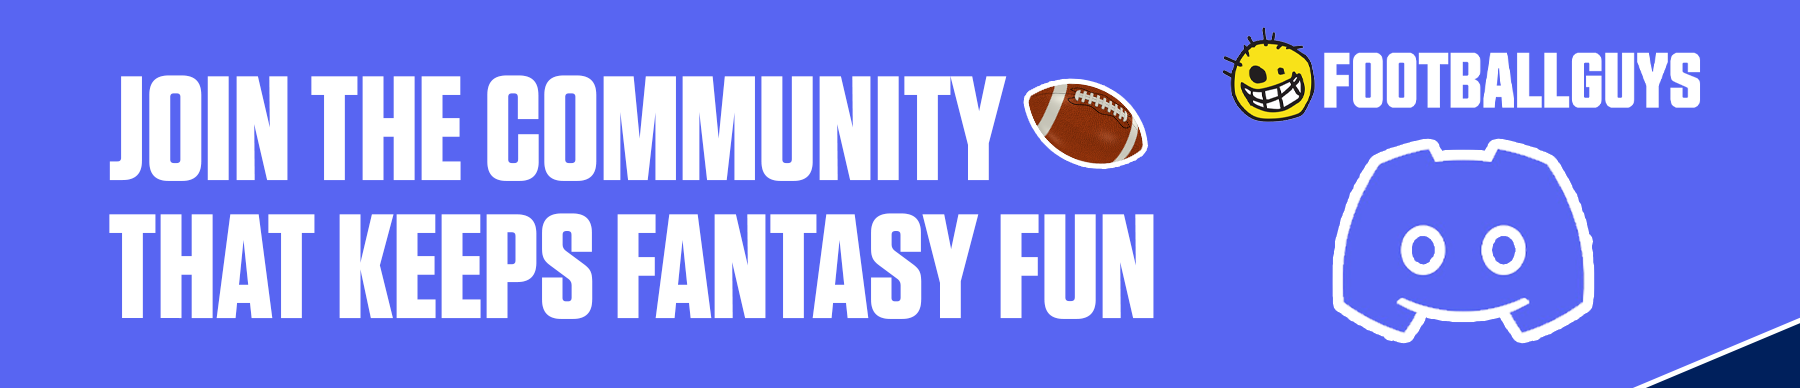 Footballguys Fantasy Football Discord Server